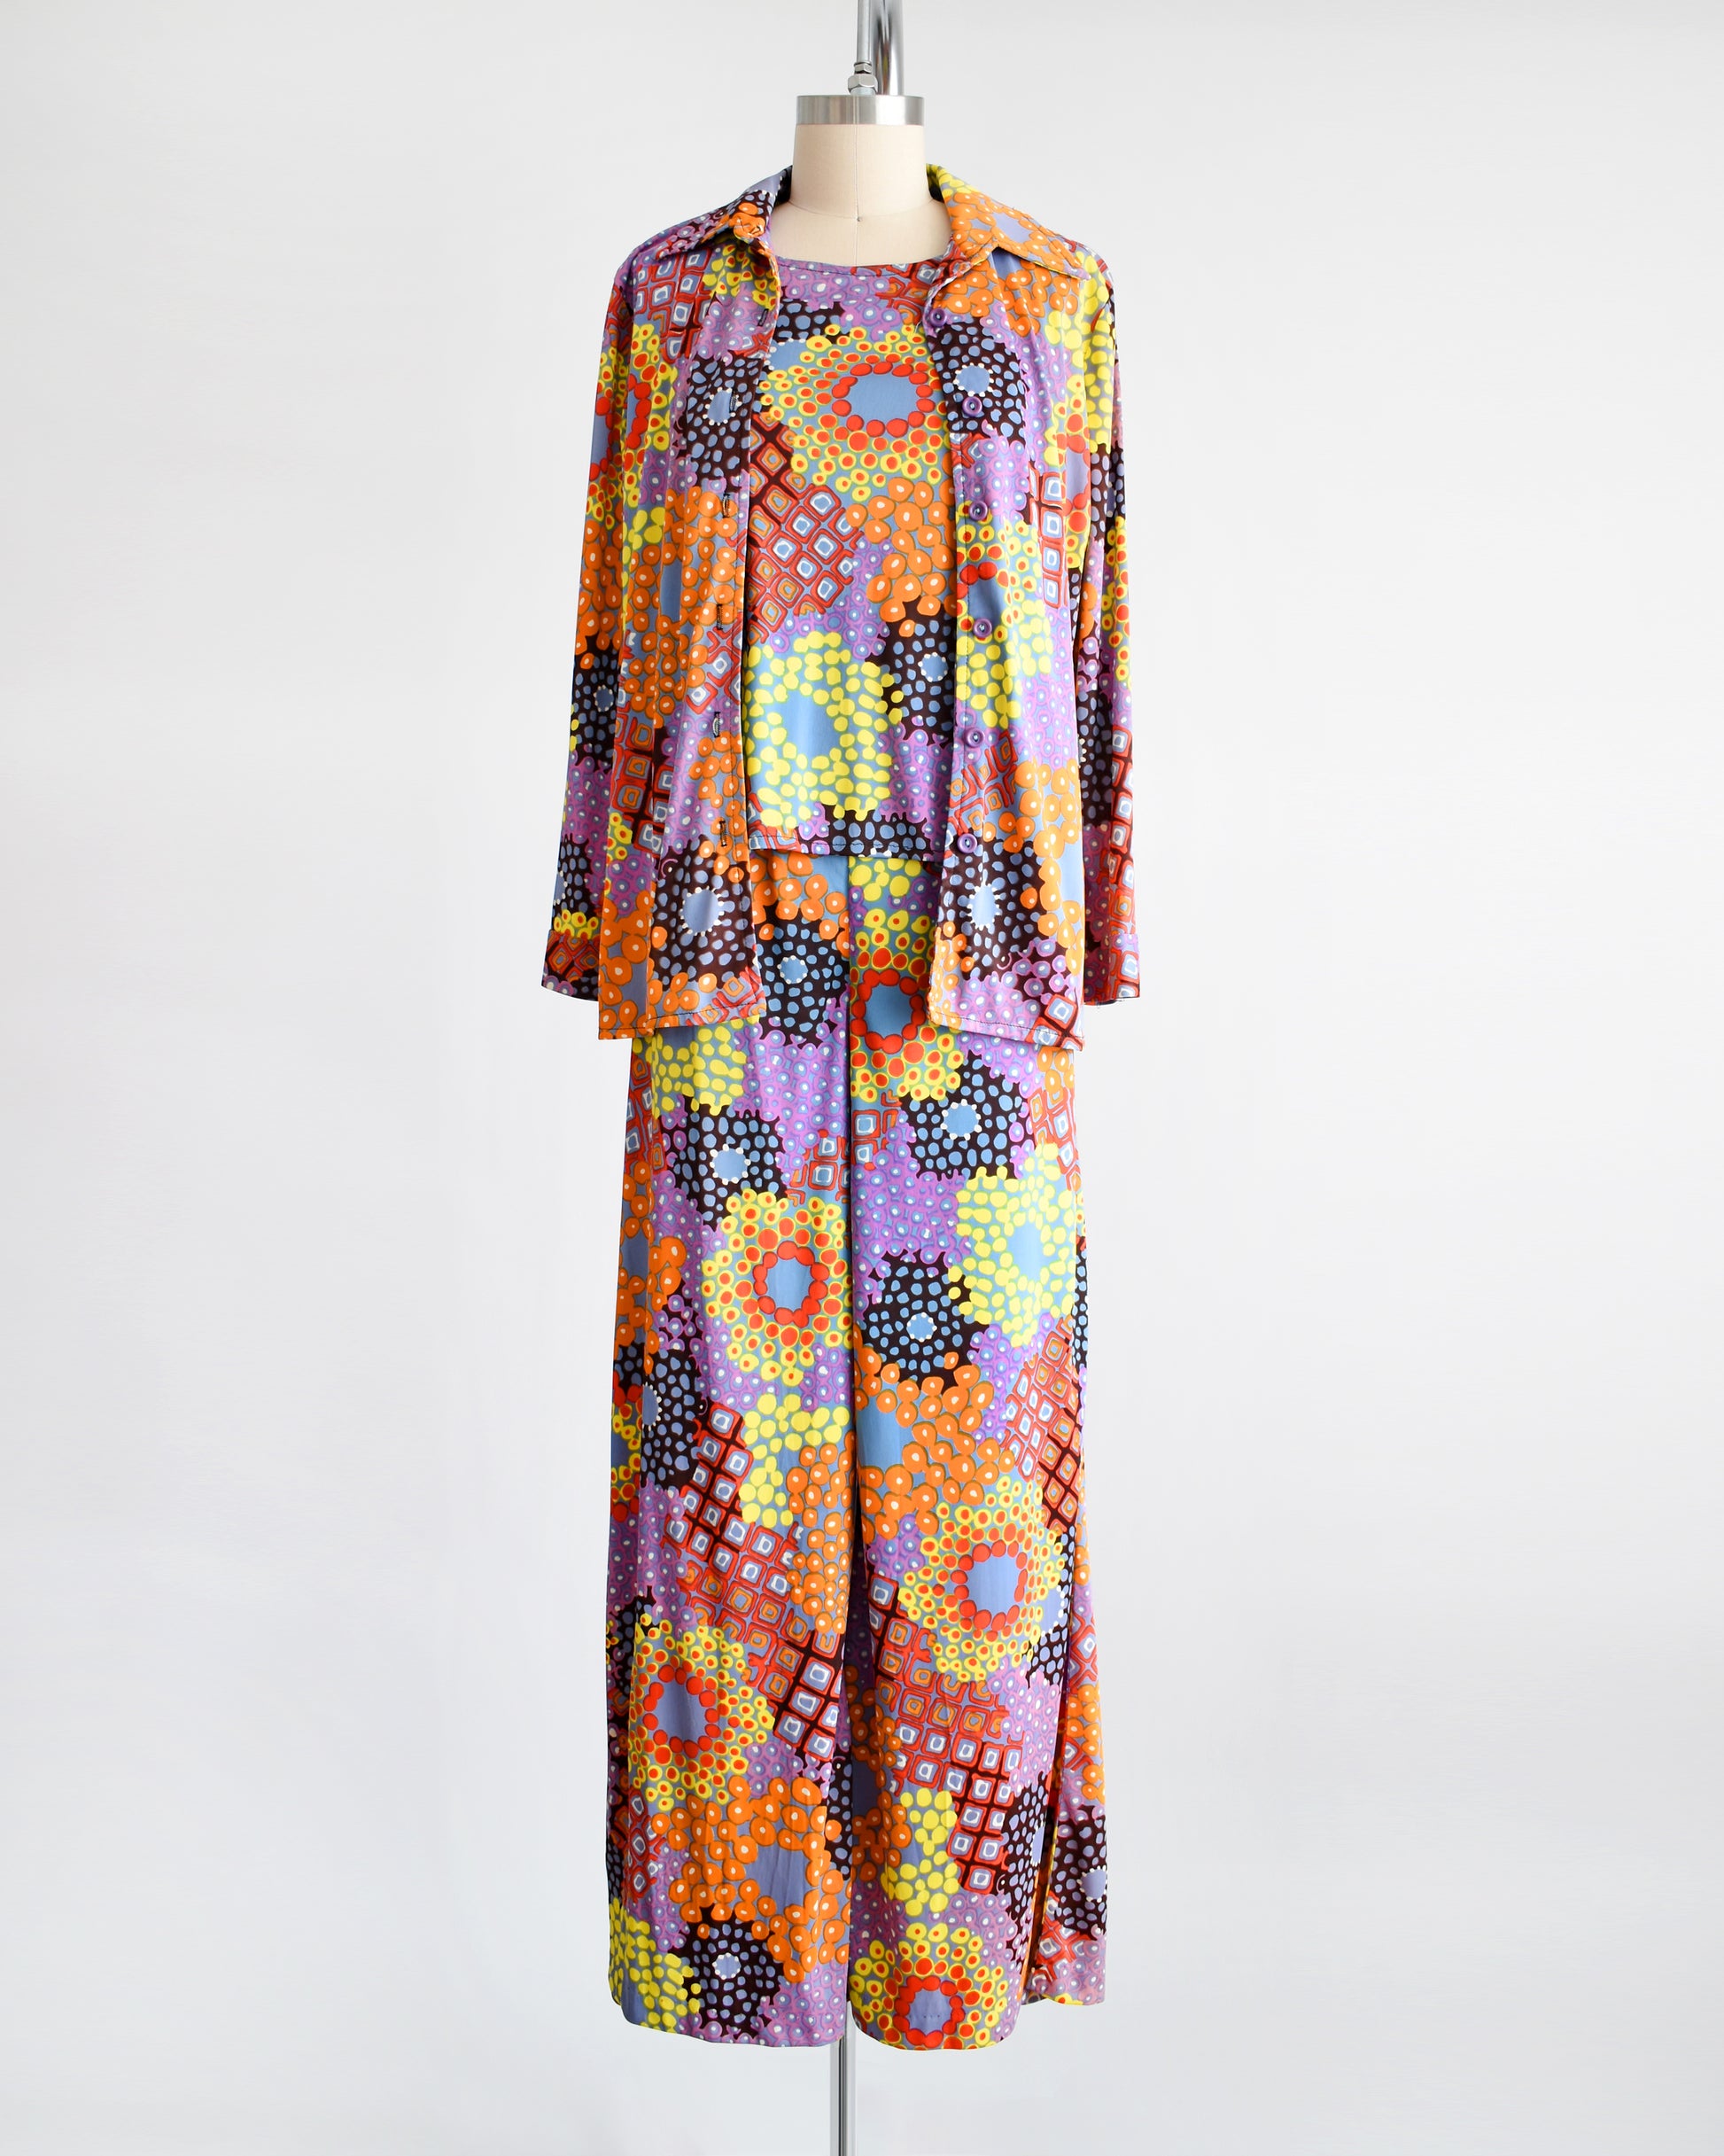 Vibrant vintage 1970 mod floral pantsuit three piece set.  The blouse is unbuttoned in this photo